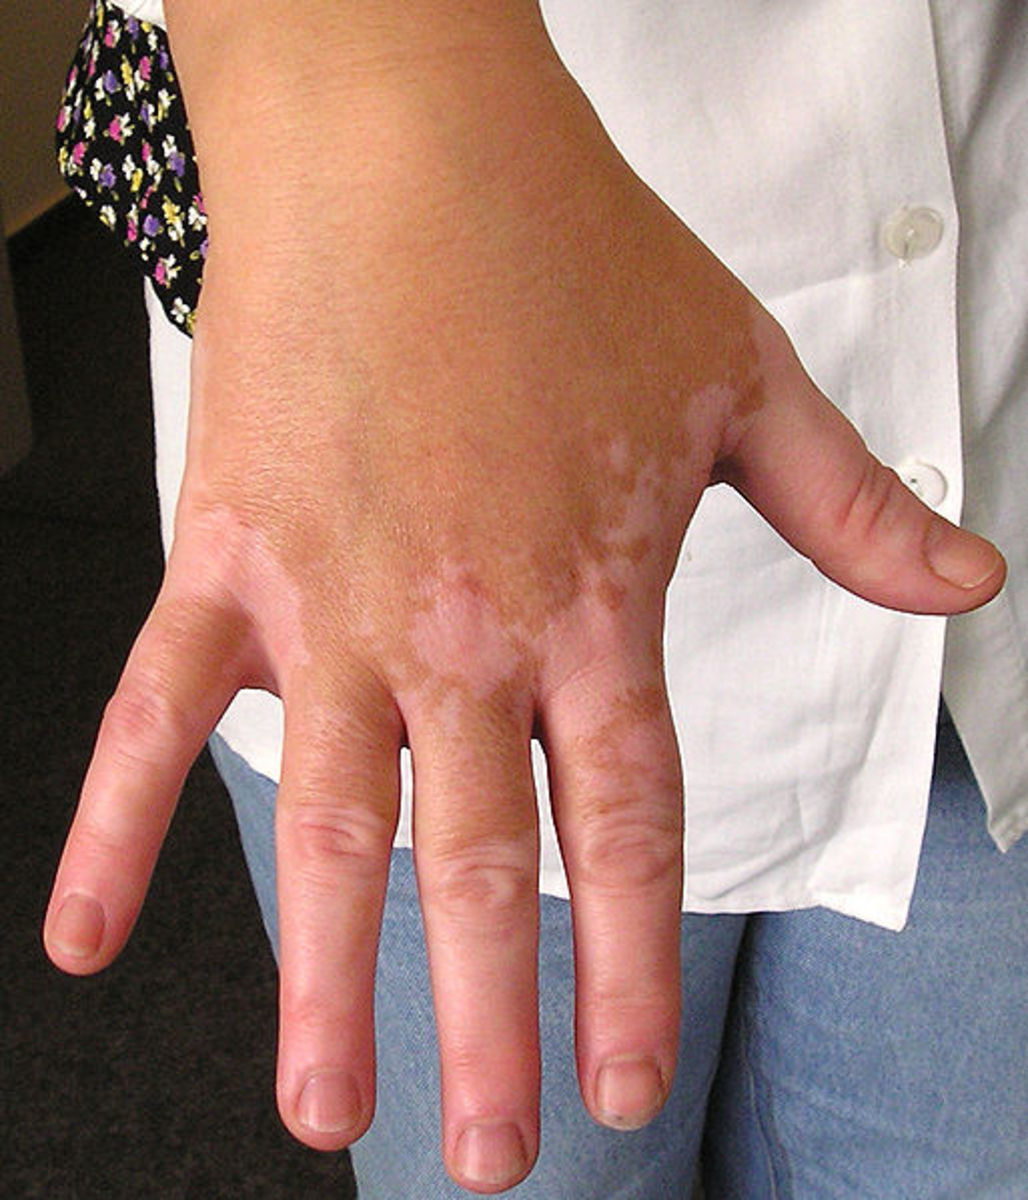 Vitiligo on someone's hand